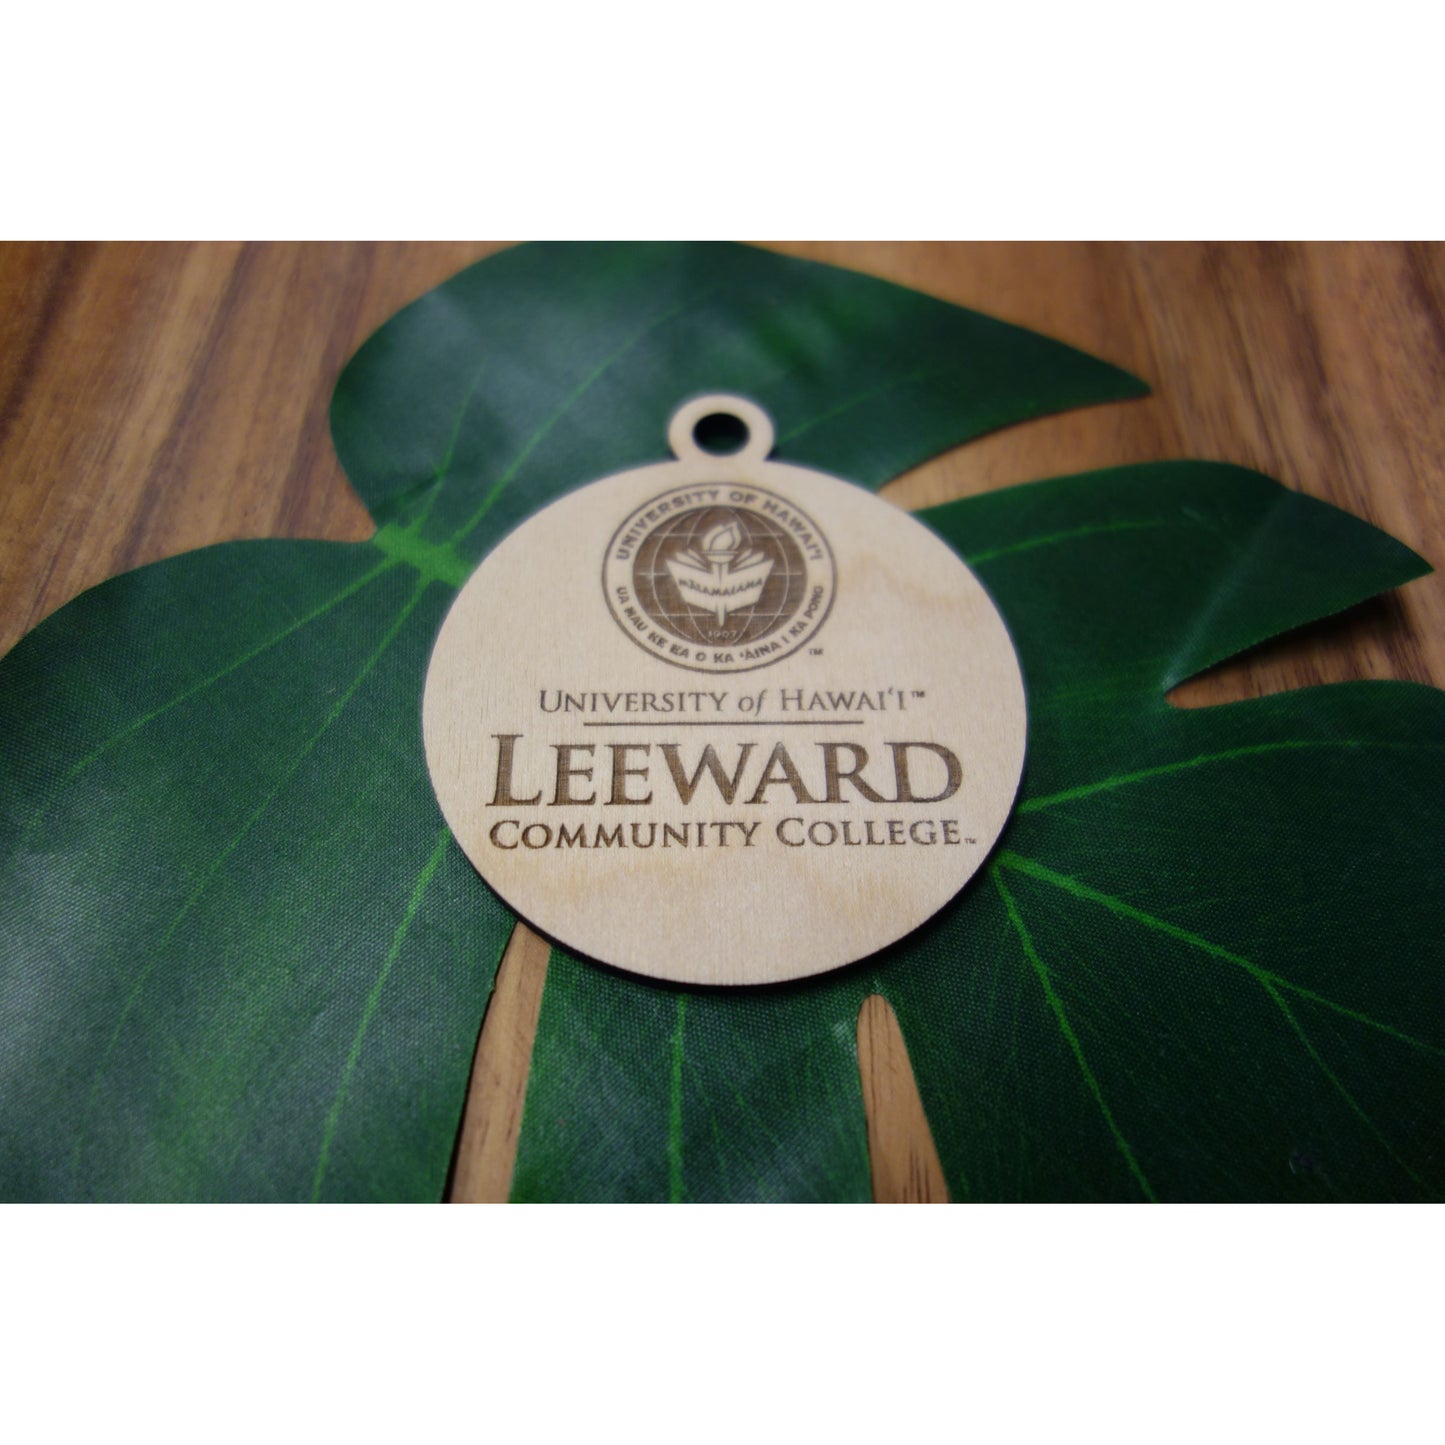 Officially Licensed University of Hawaii Leeward Community College Keepsake Ornament